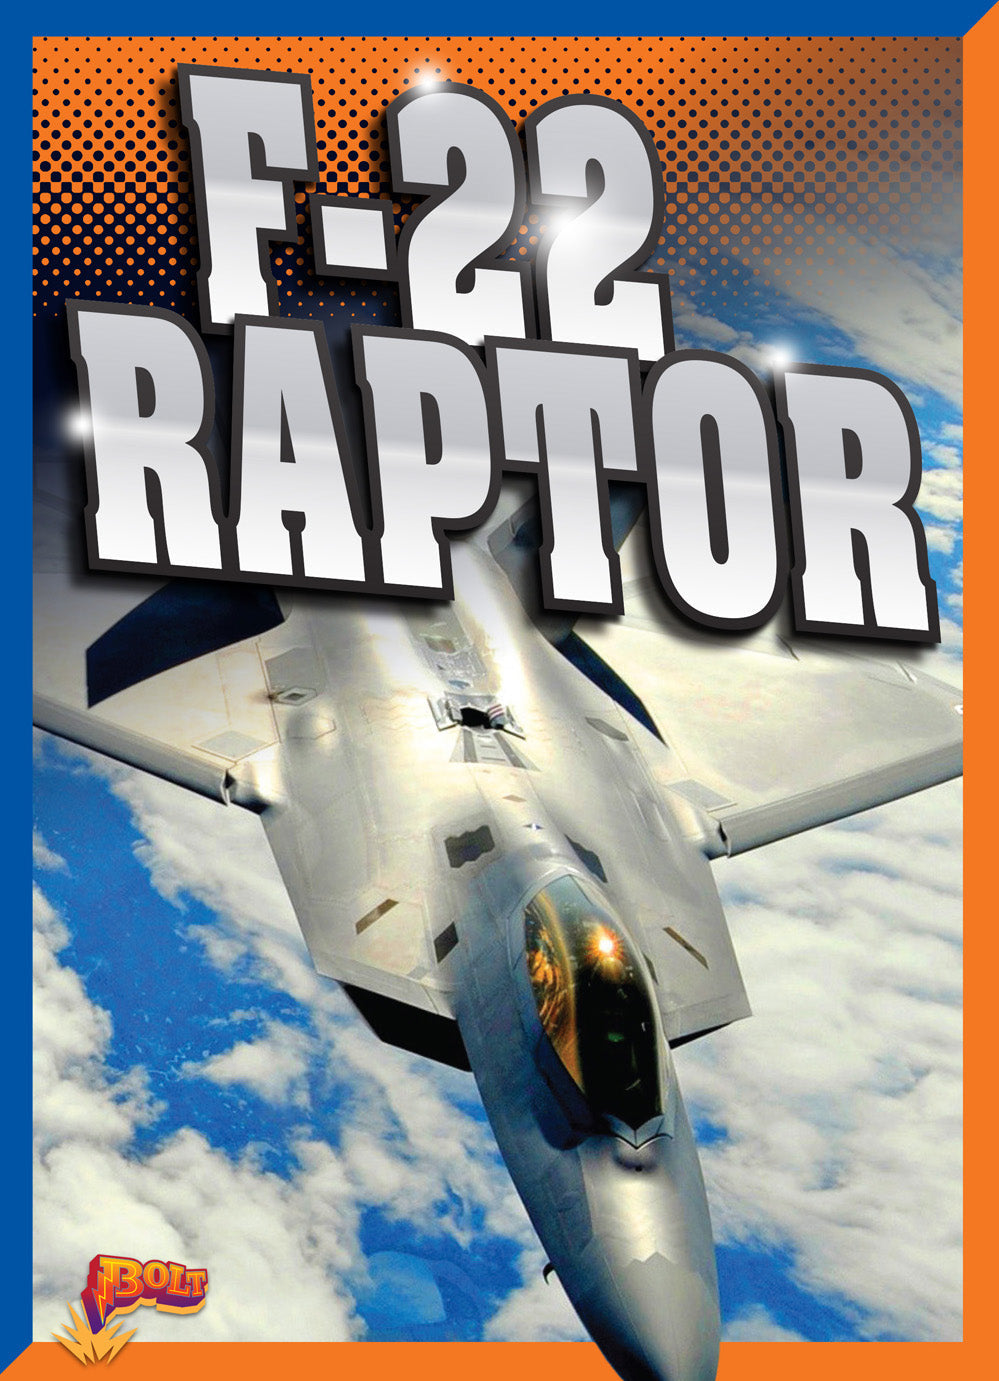 Air Power: F22 Raptor